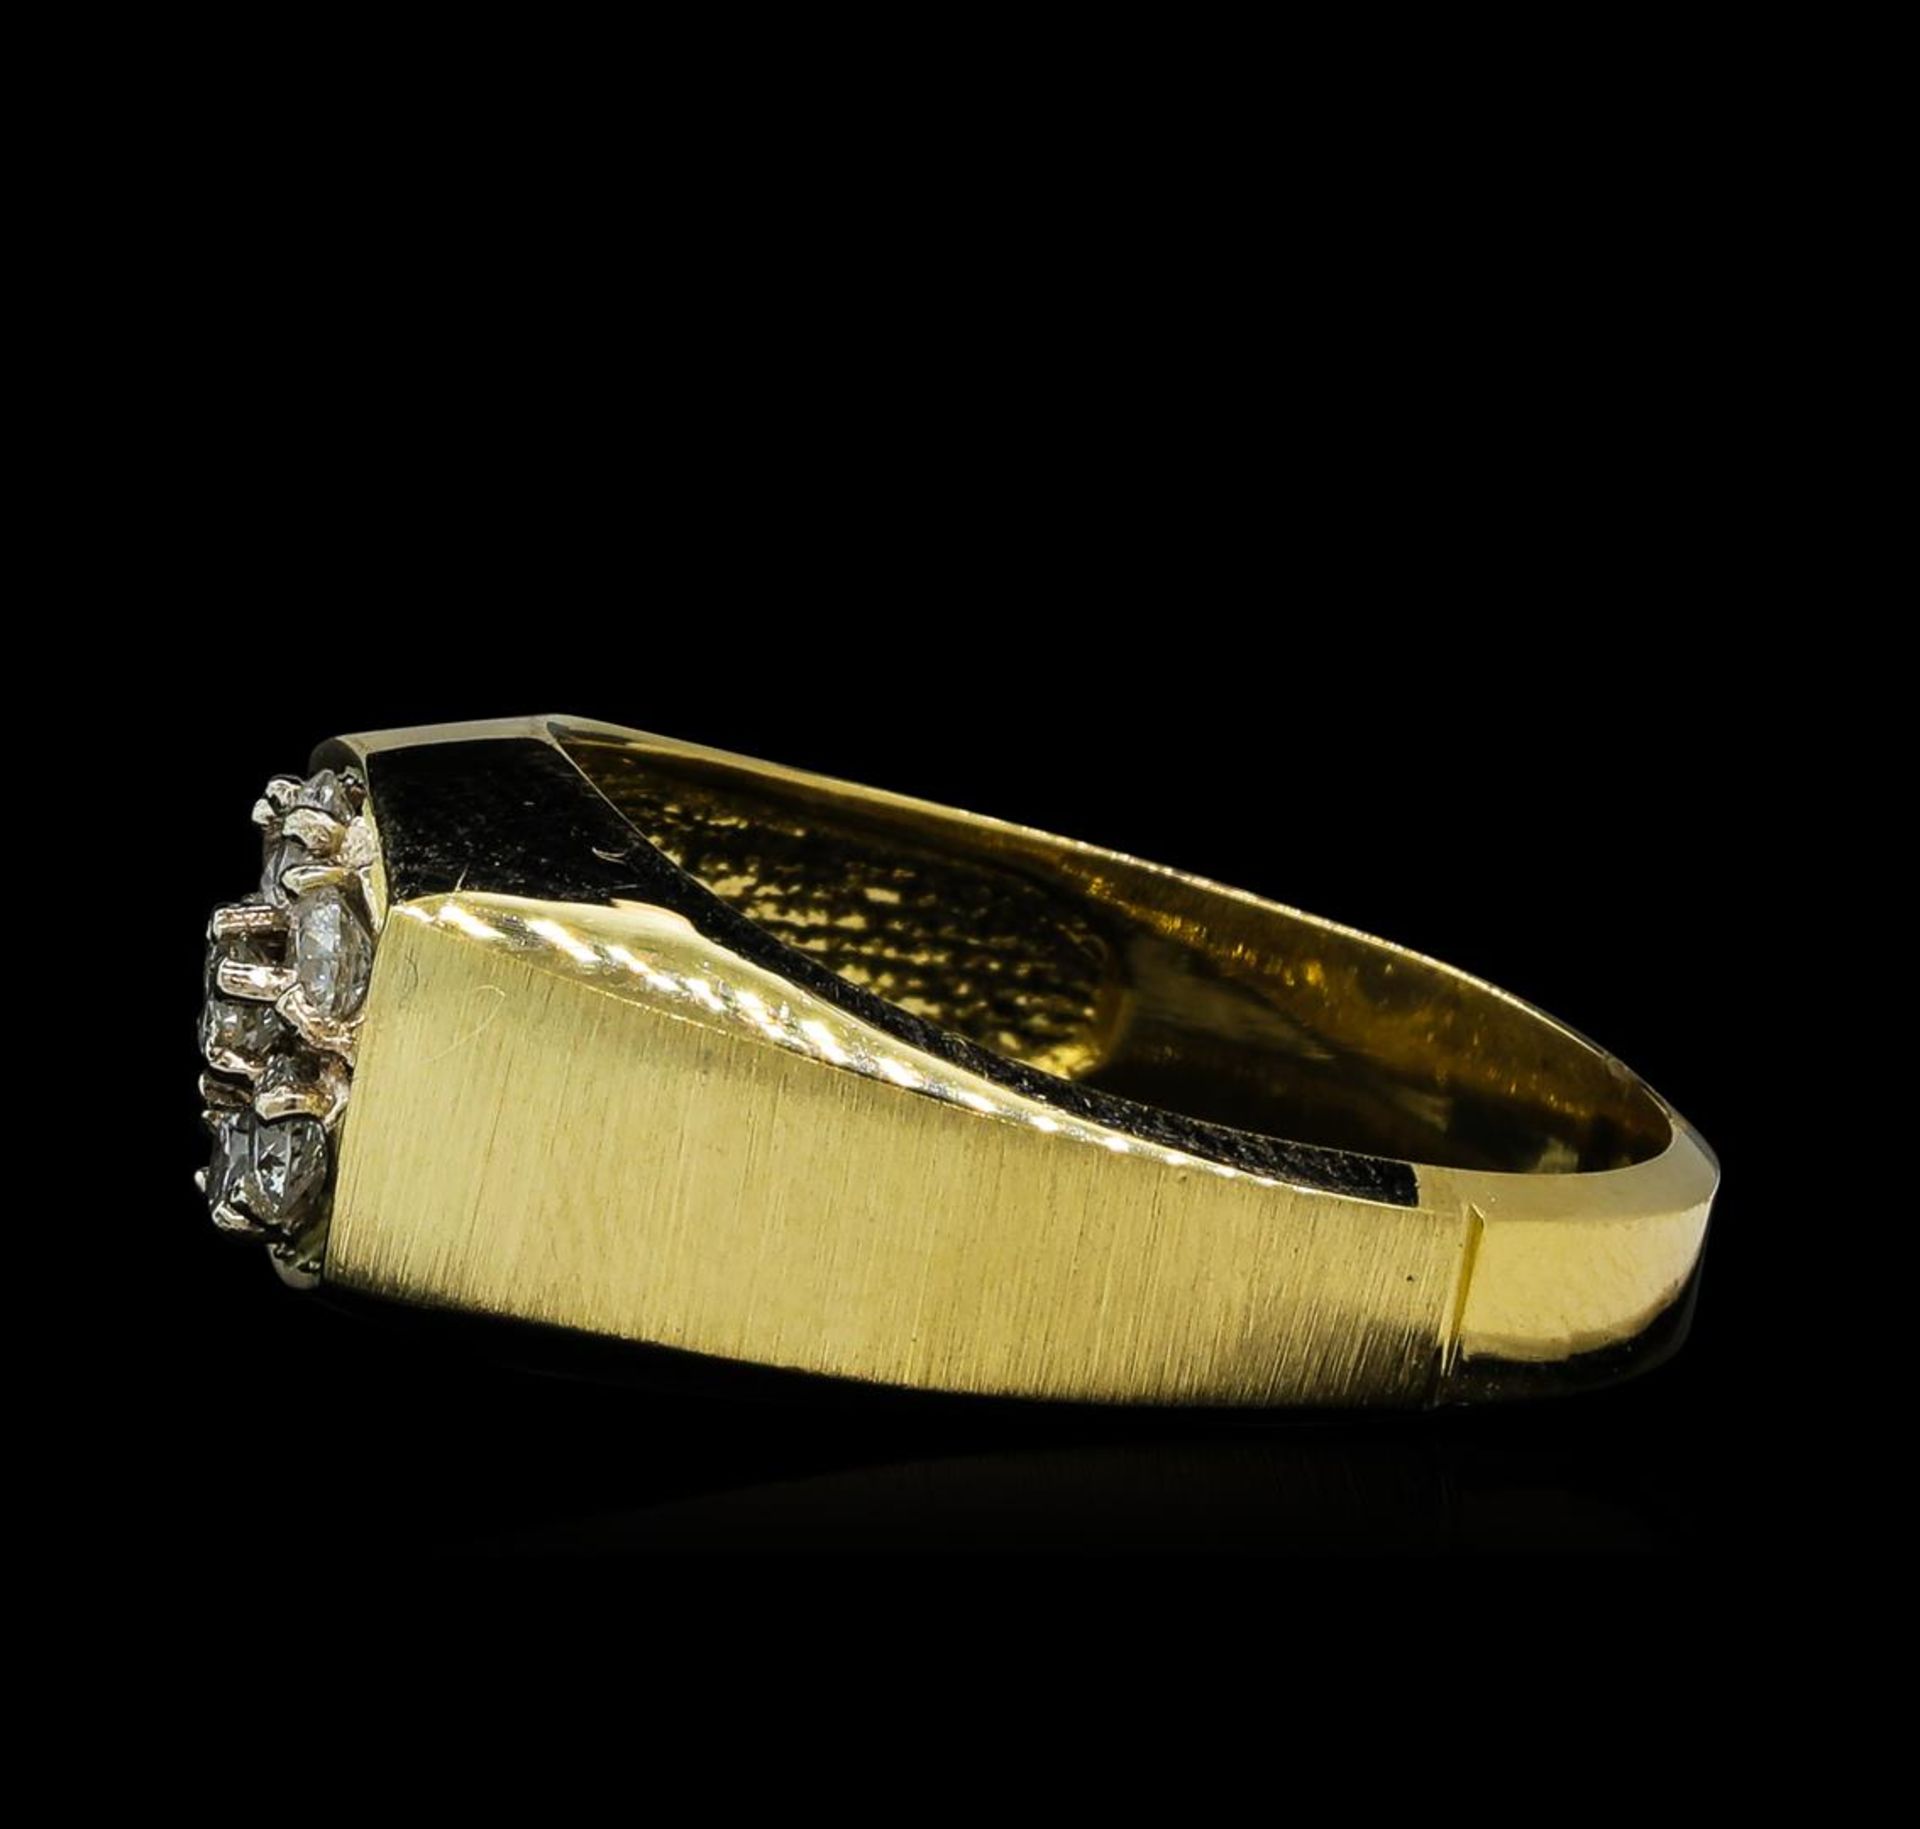 0.56 ctw Diamond Ring - 14KT Yellow Gold - Image 3 of 4